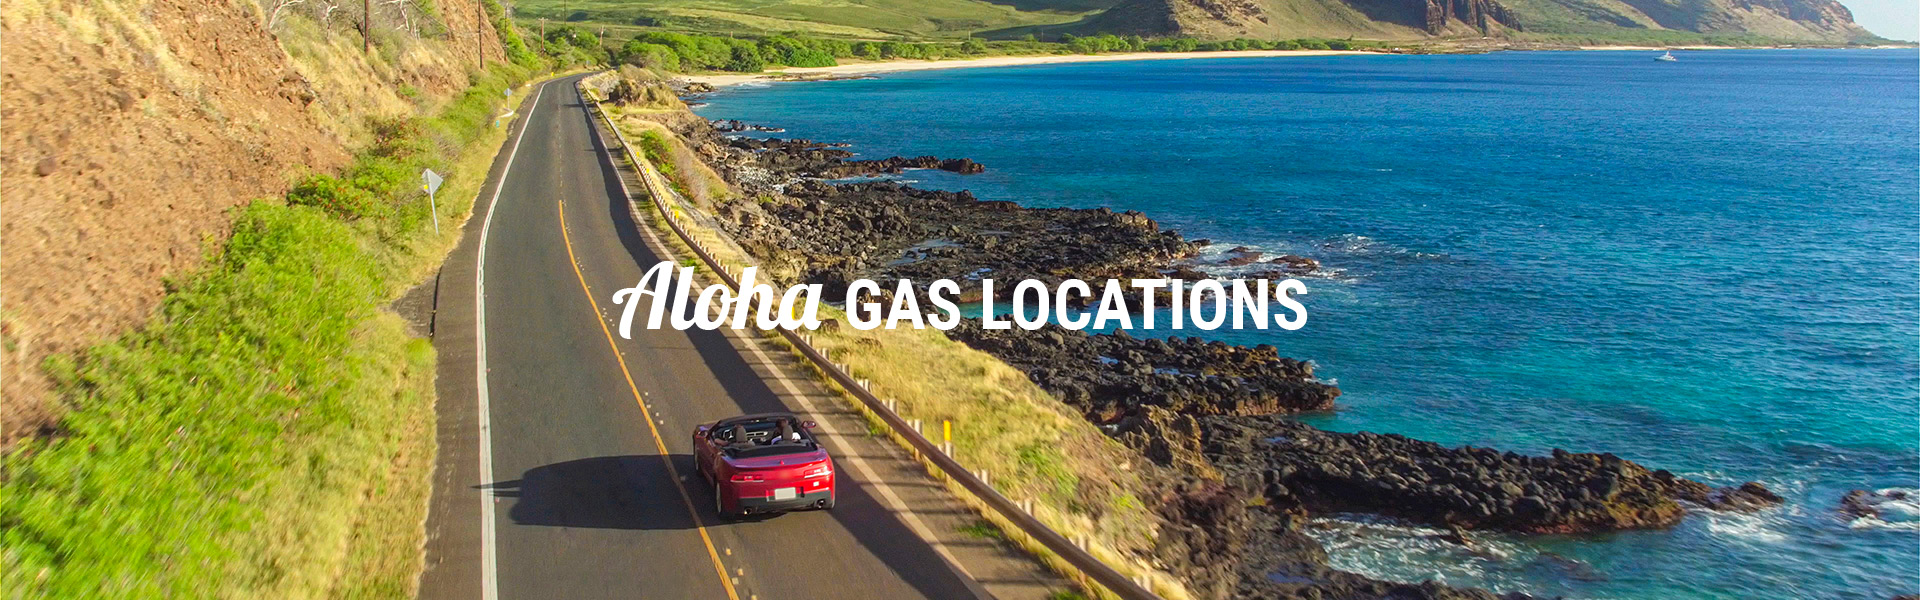 Aloha Gas Locations